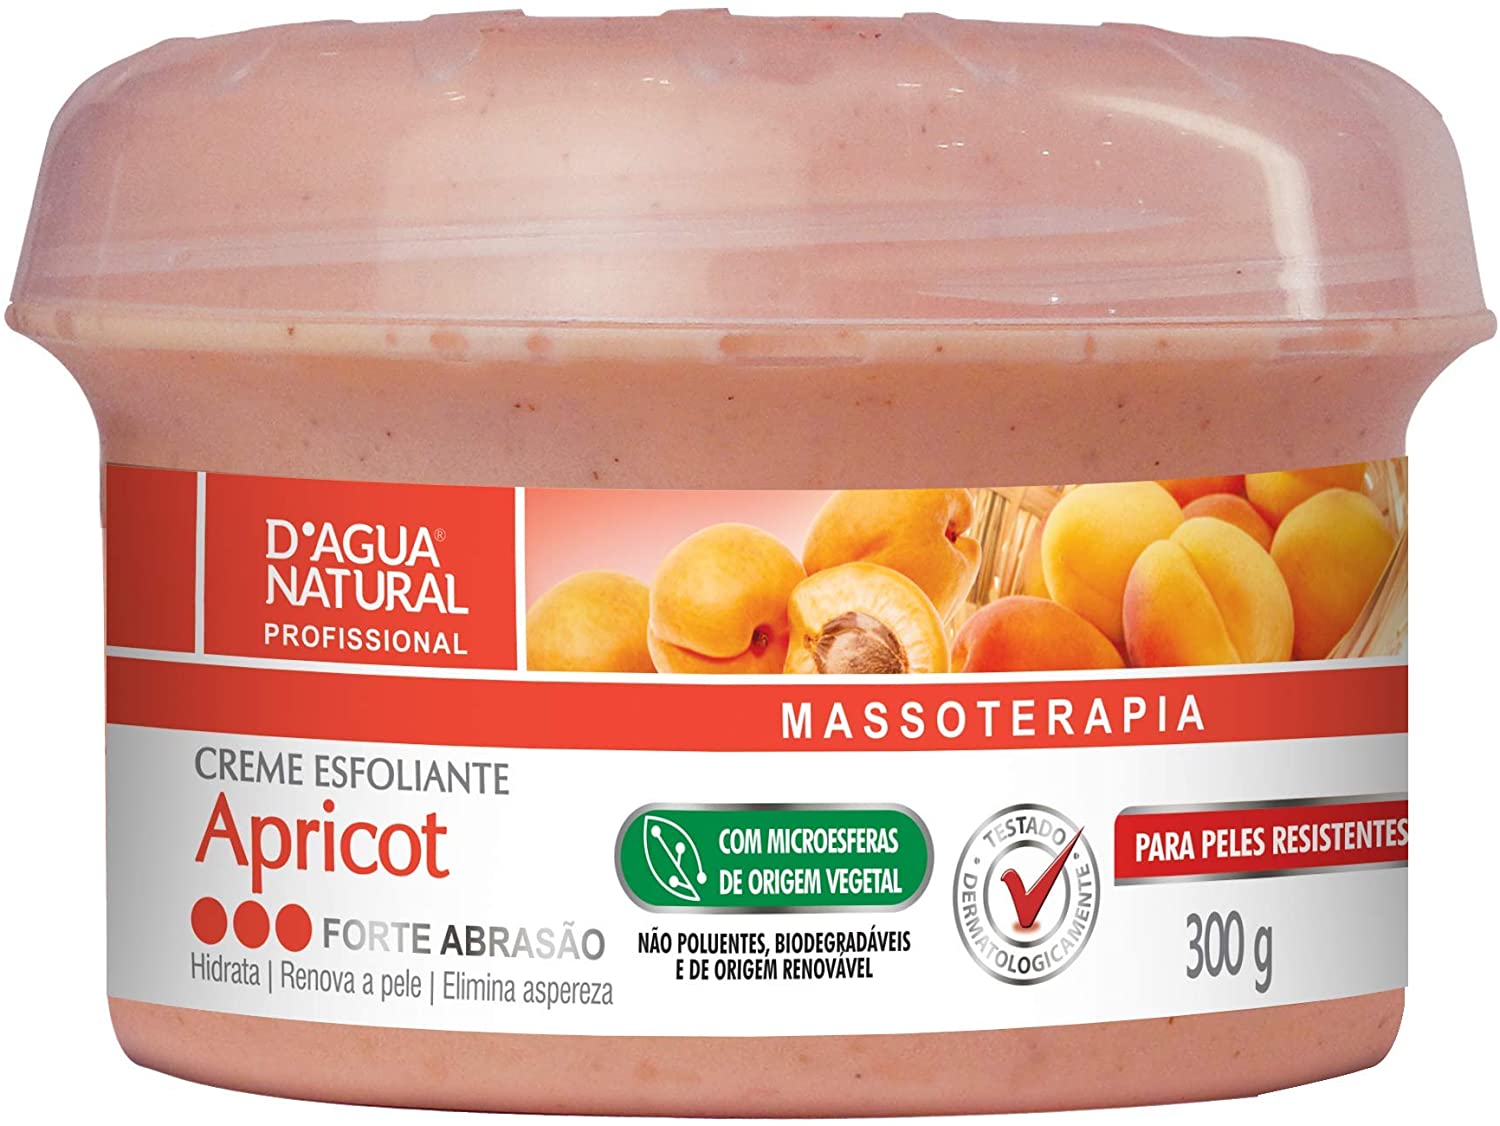 Creme Esfoliante Apricot Forte Abrasão, D'agua Natural